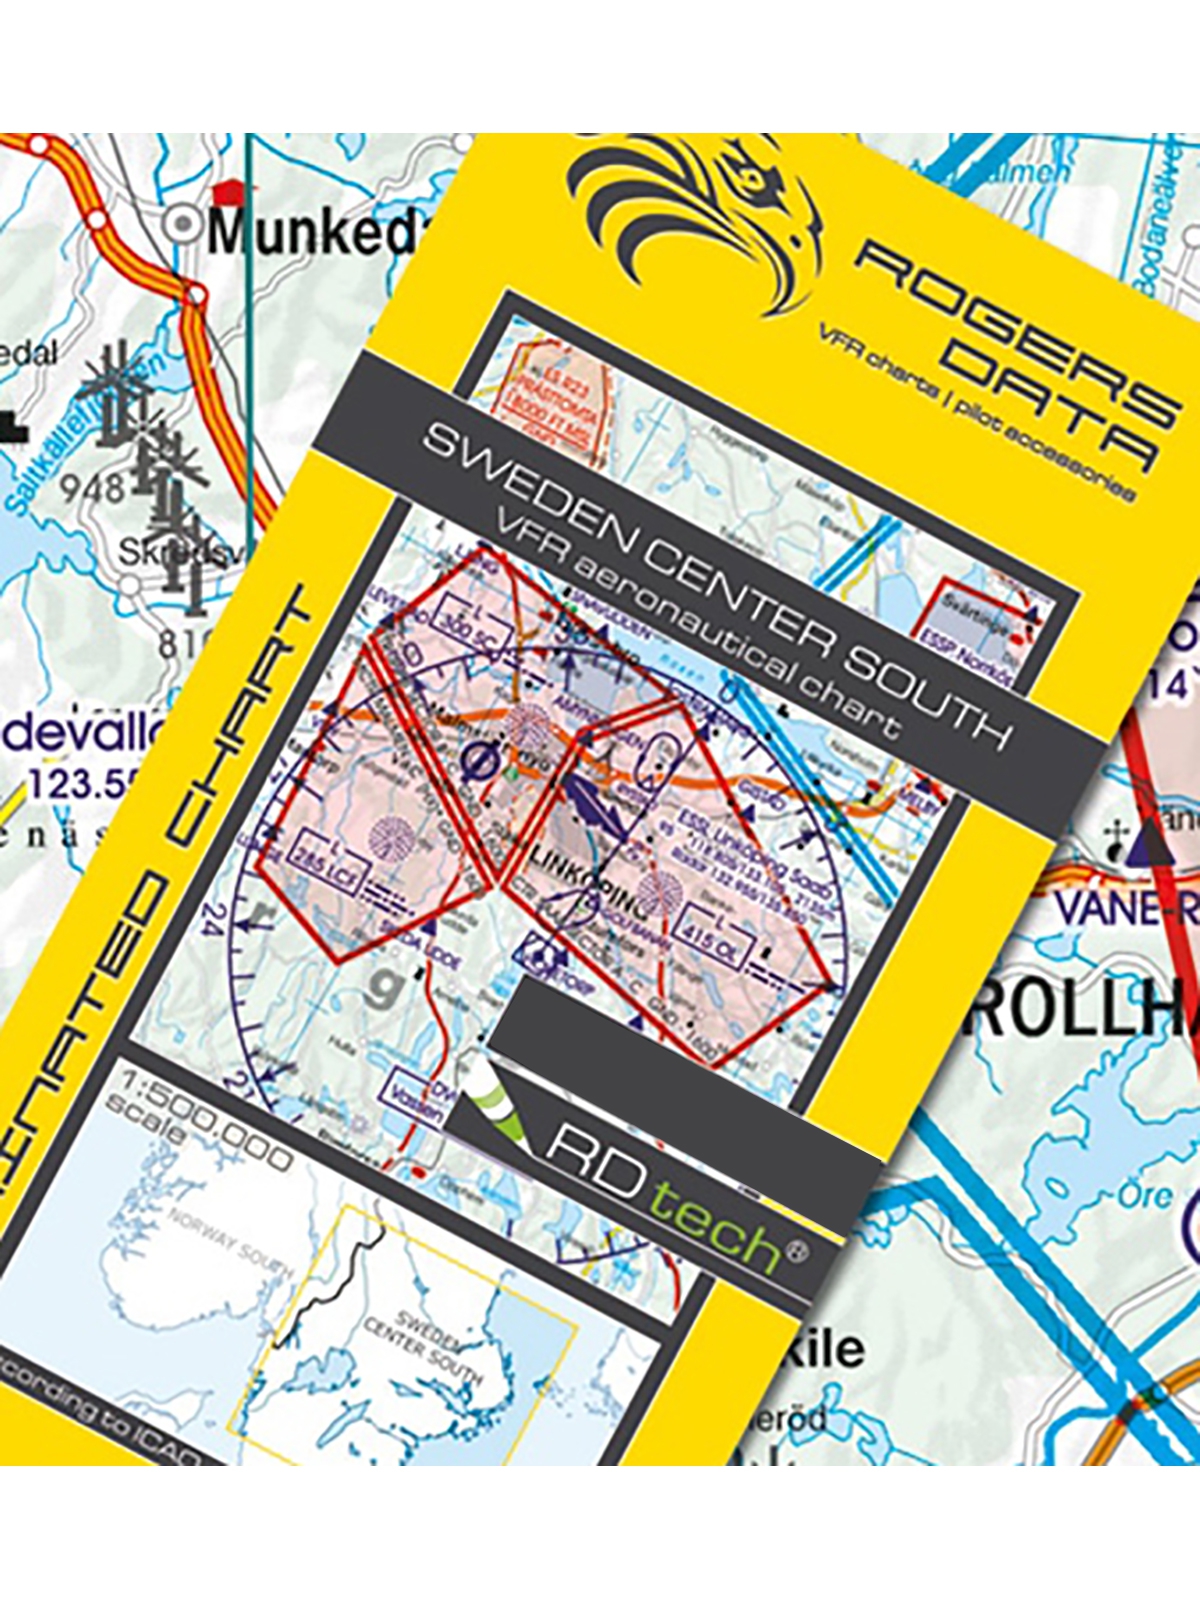 Sweden Center South - Rogers Data VFR Chart, 1:500,000, laminated, folded